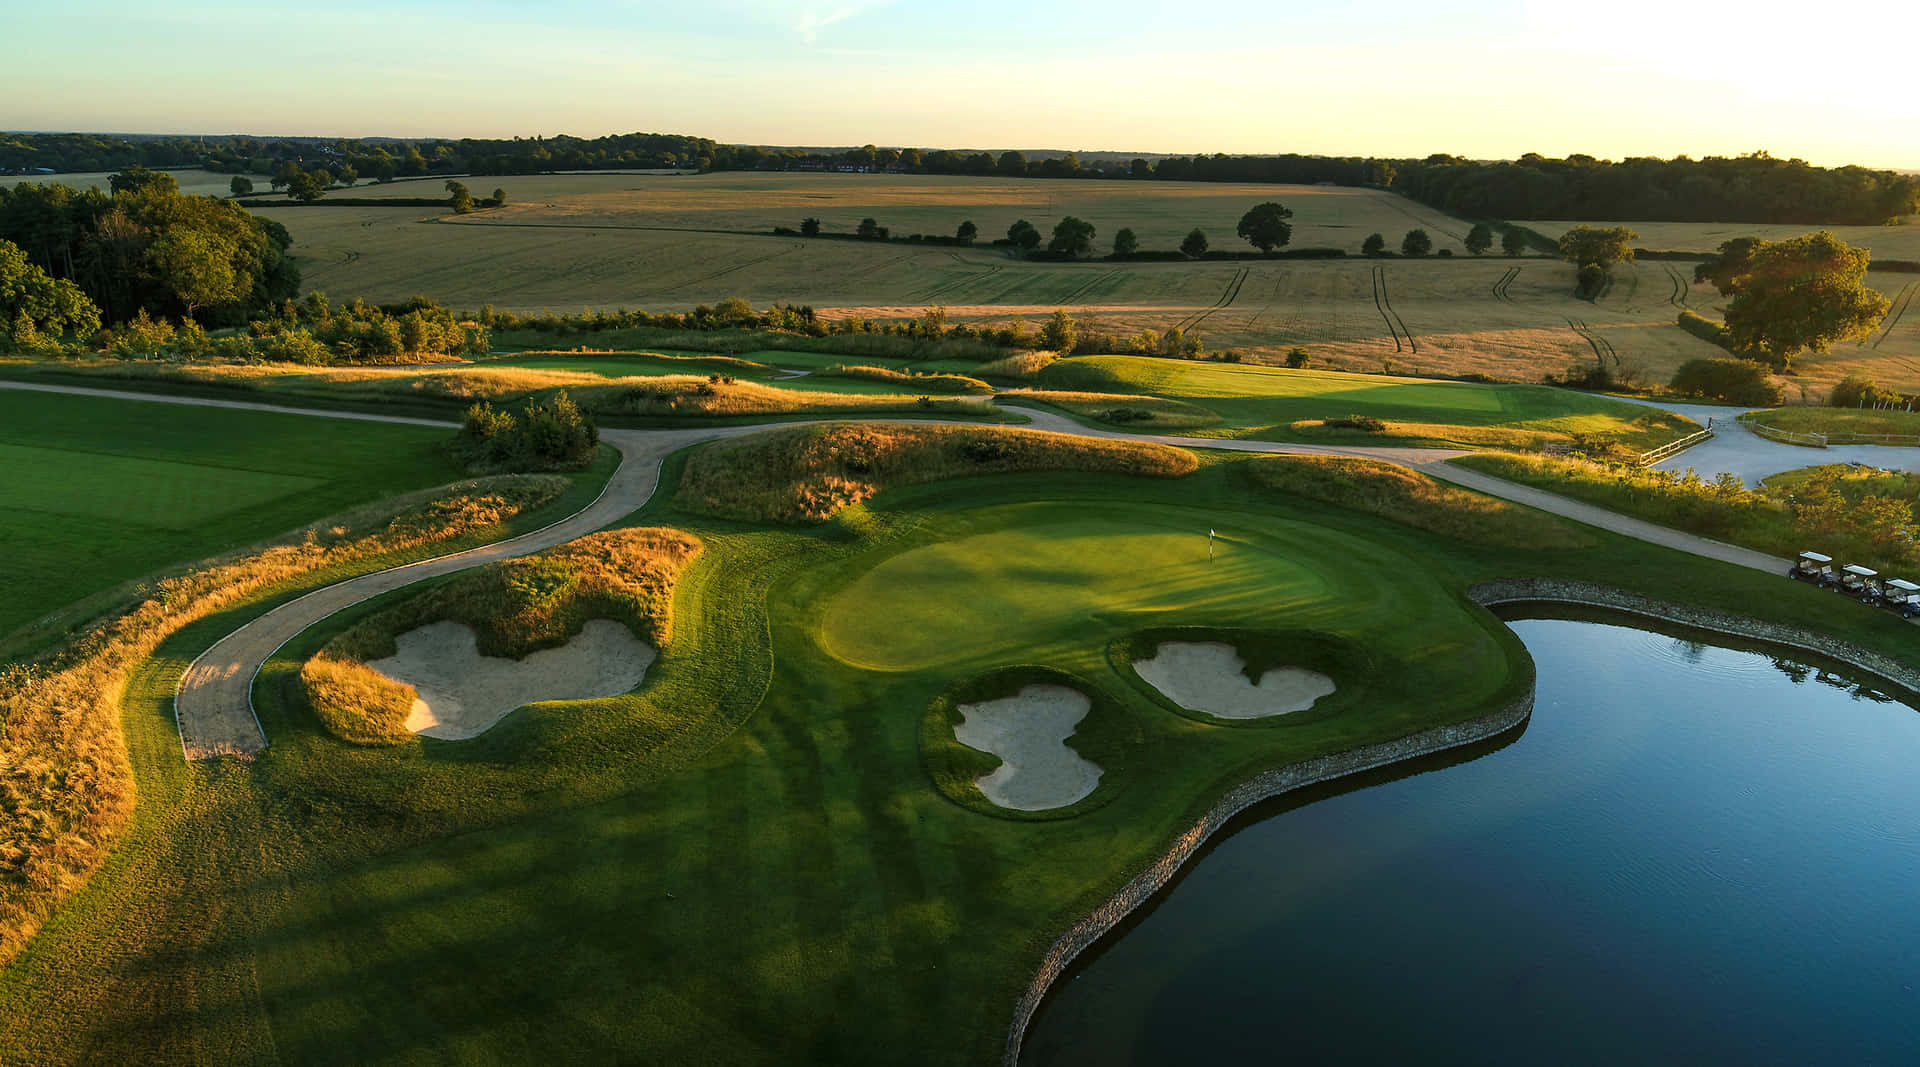 An idyllic view of a lush green golf course